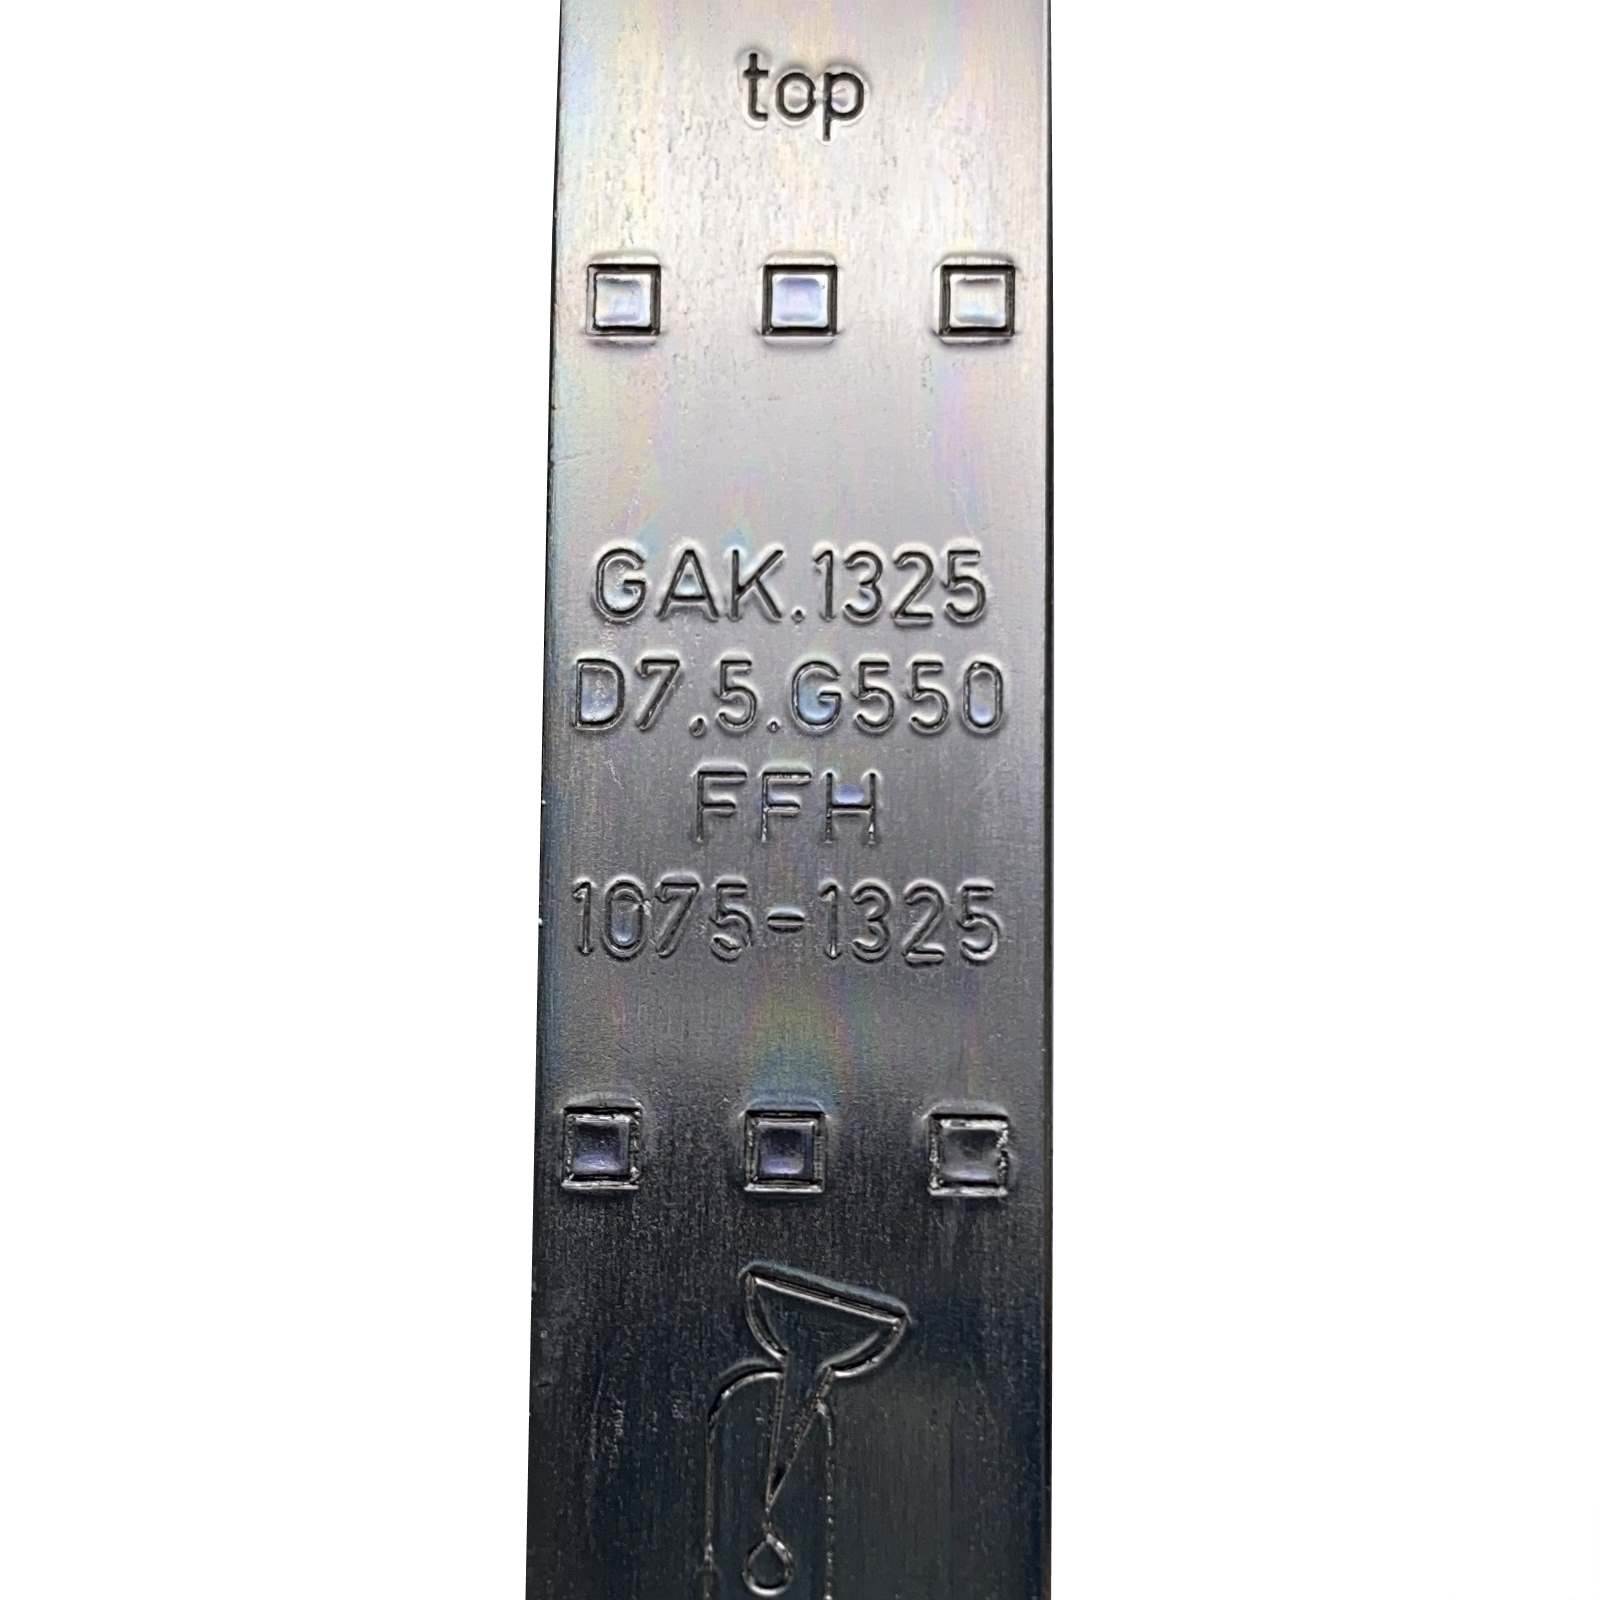 Winkhaus Getriebeschiene GAK.1325-2, DM 7,5 mm, FFH 1075-1325 mm